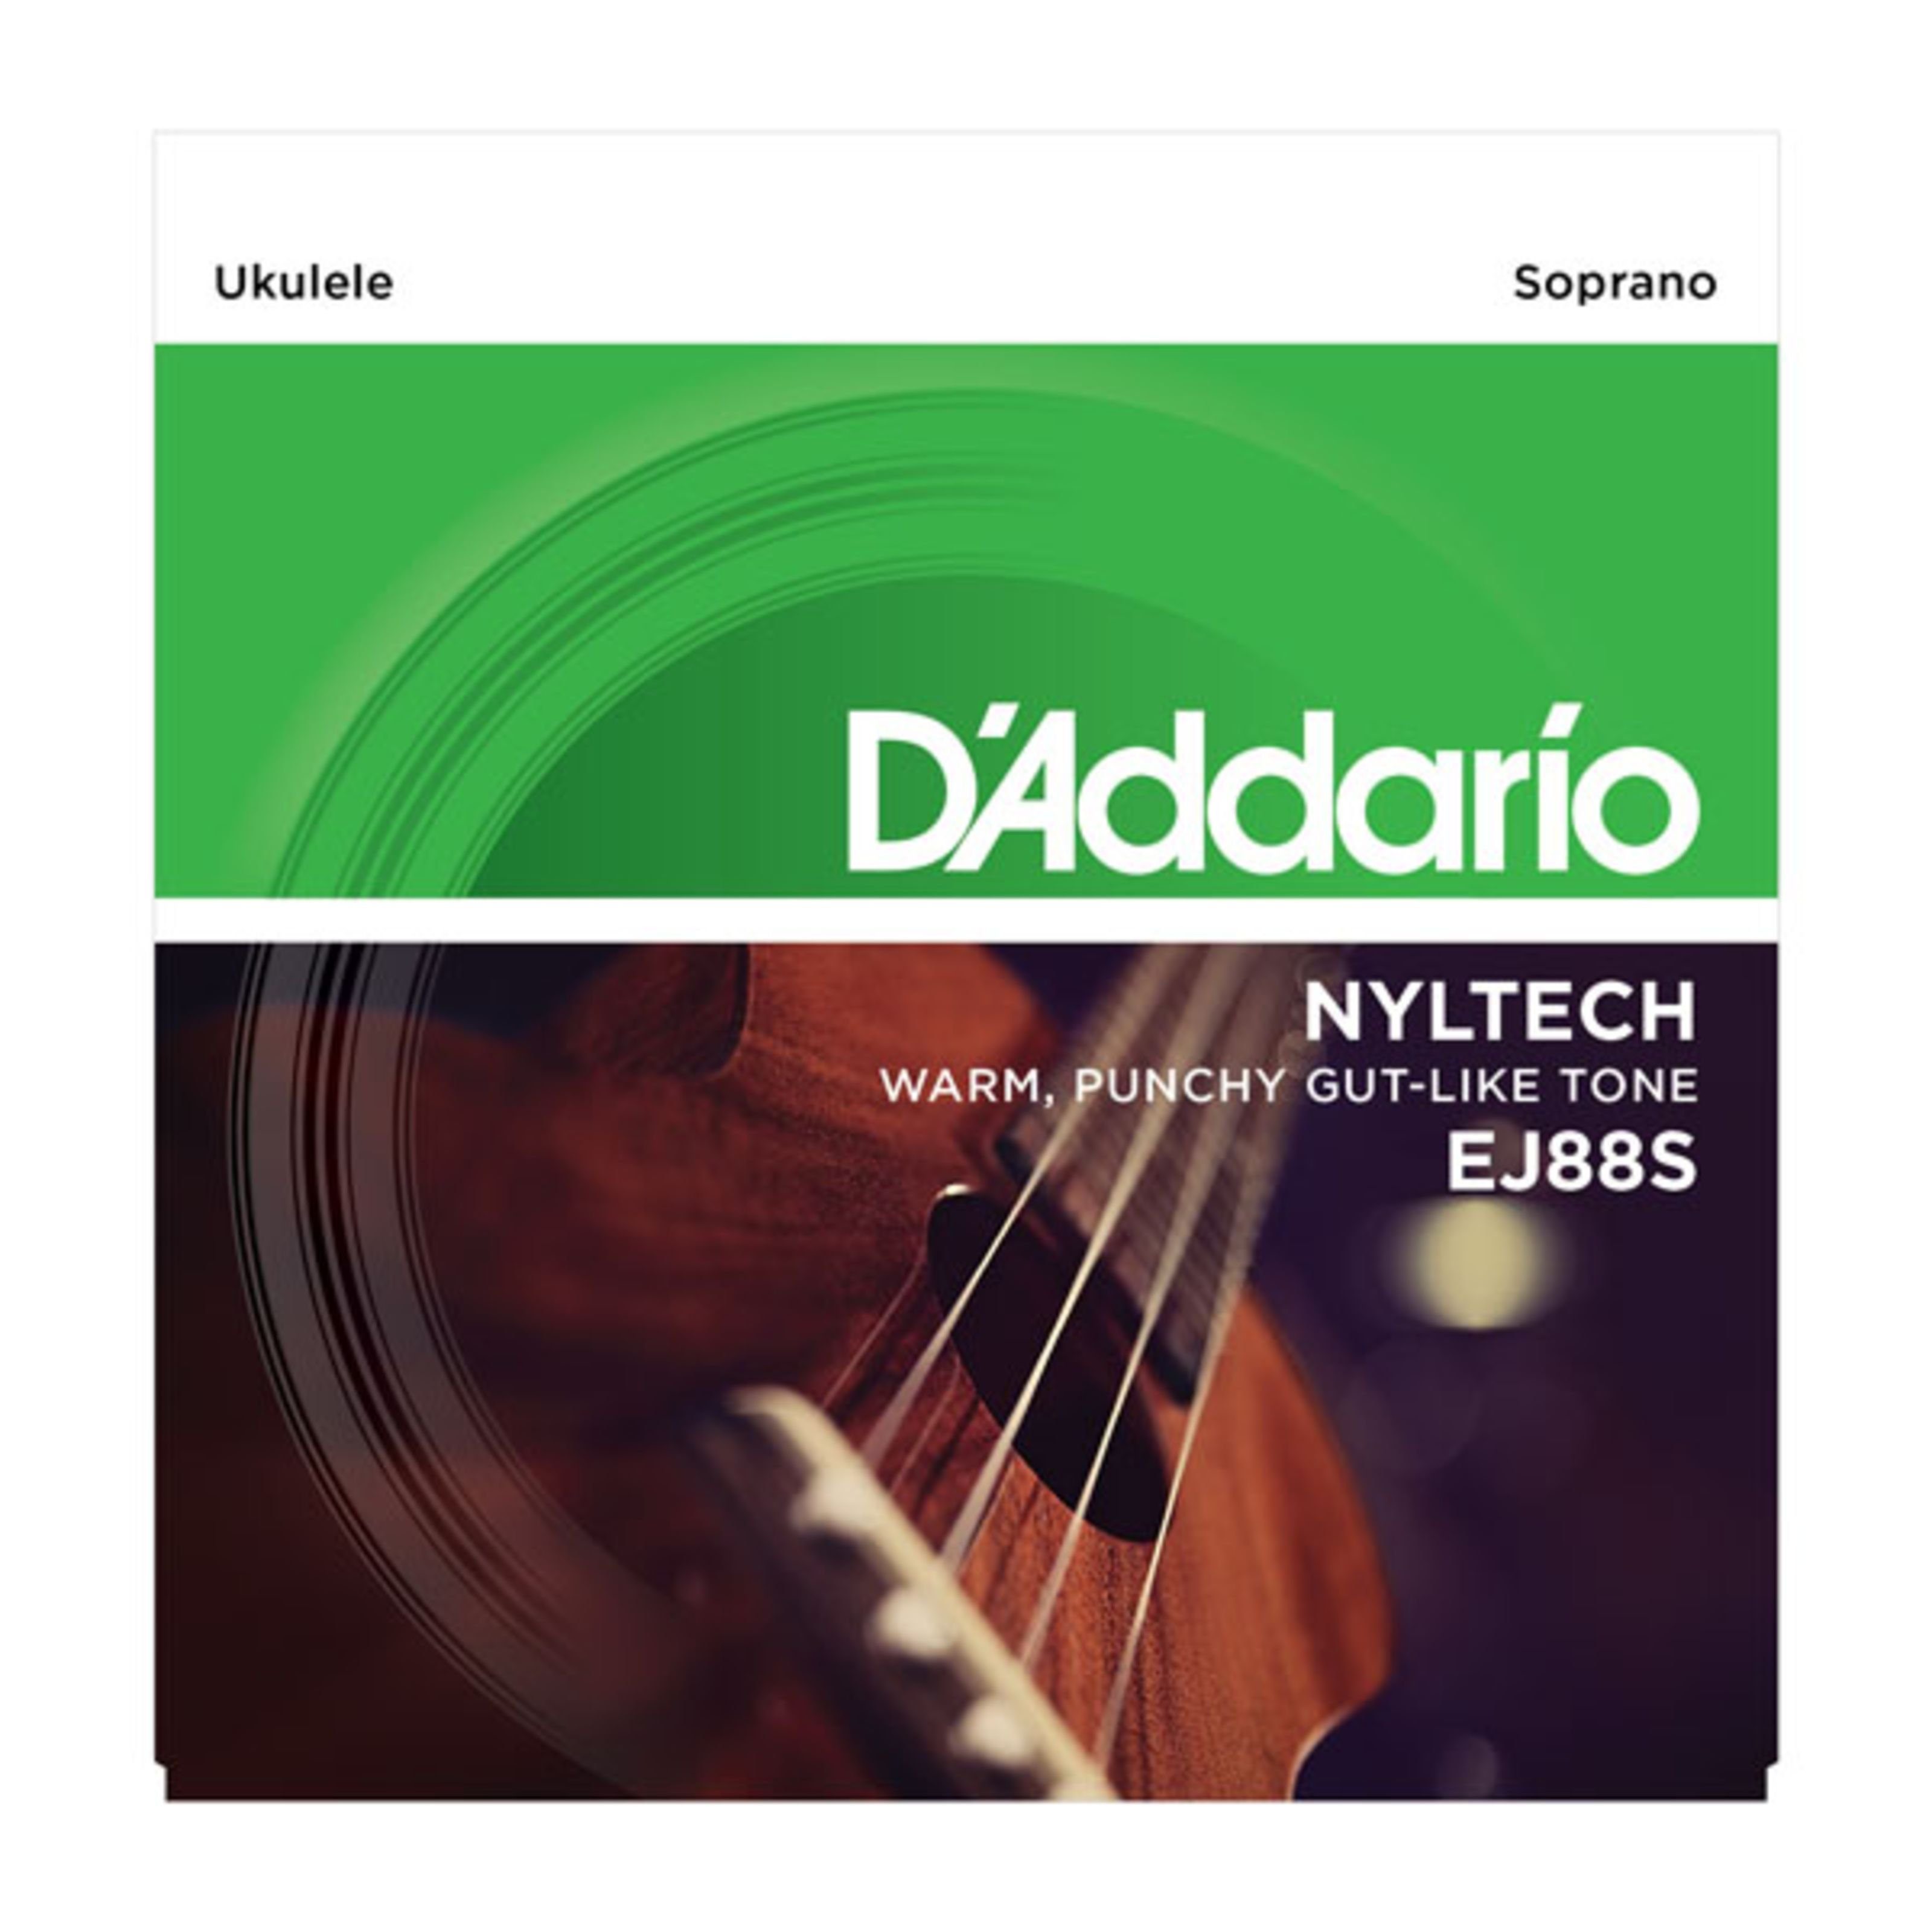 Daddario Spielzeug-Musikinstrument, Ukulele Saiten EJ88S - Sopran Nyltech 24-30-36-26 Saiten